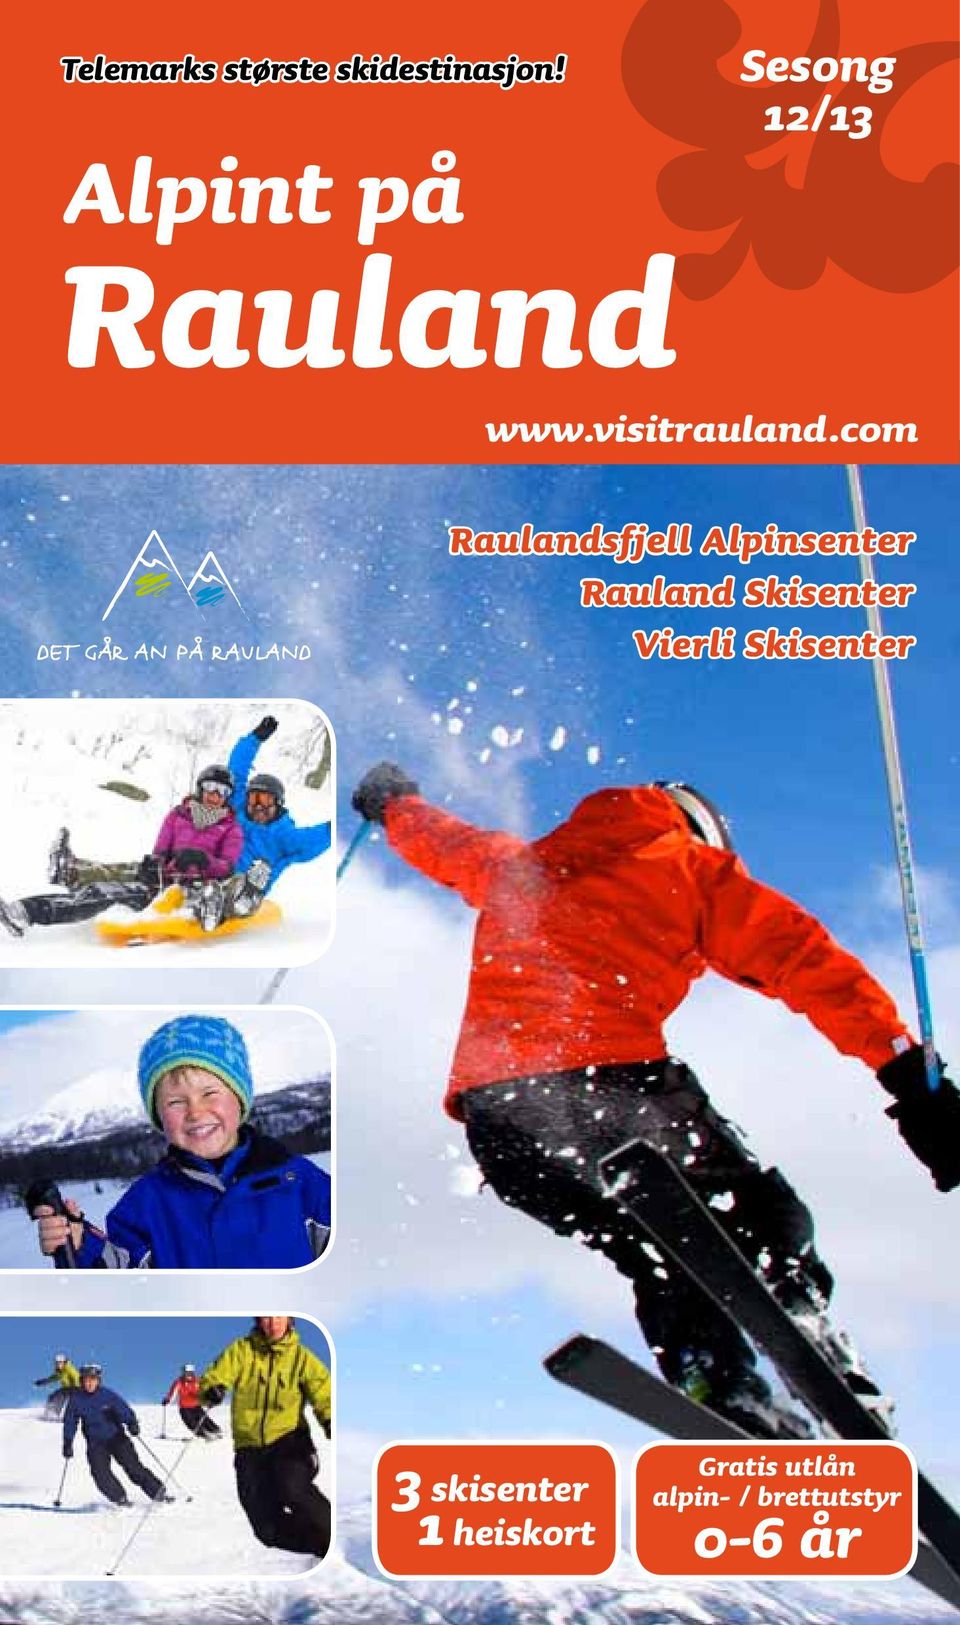 com Raulandsfjell Alpinsenter Rauland Skisenter